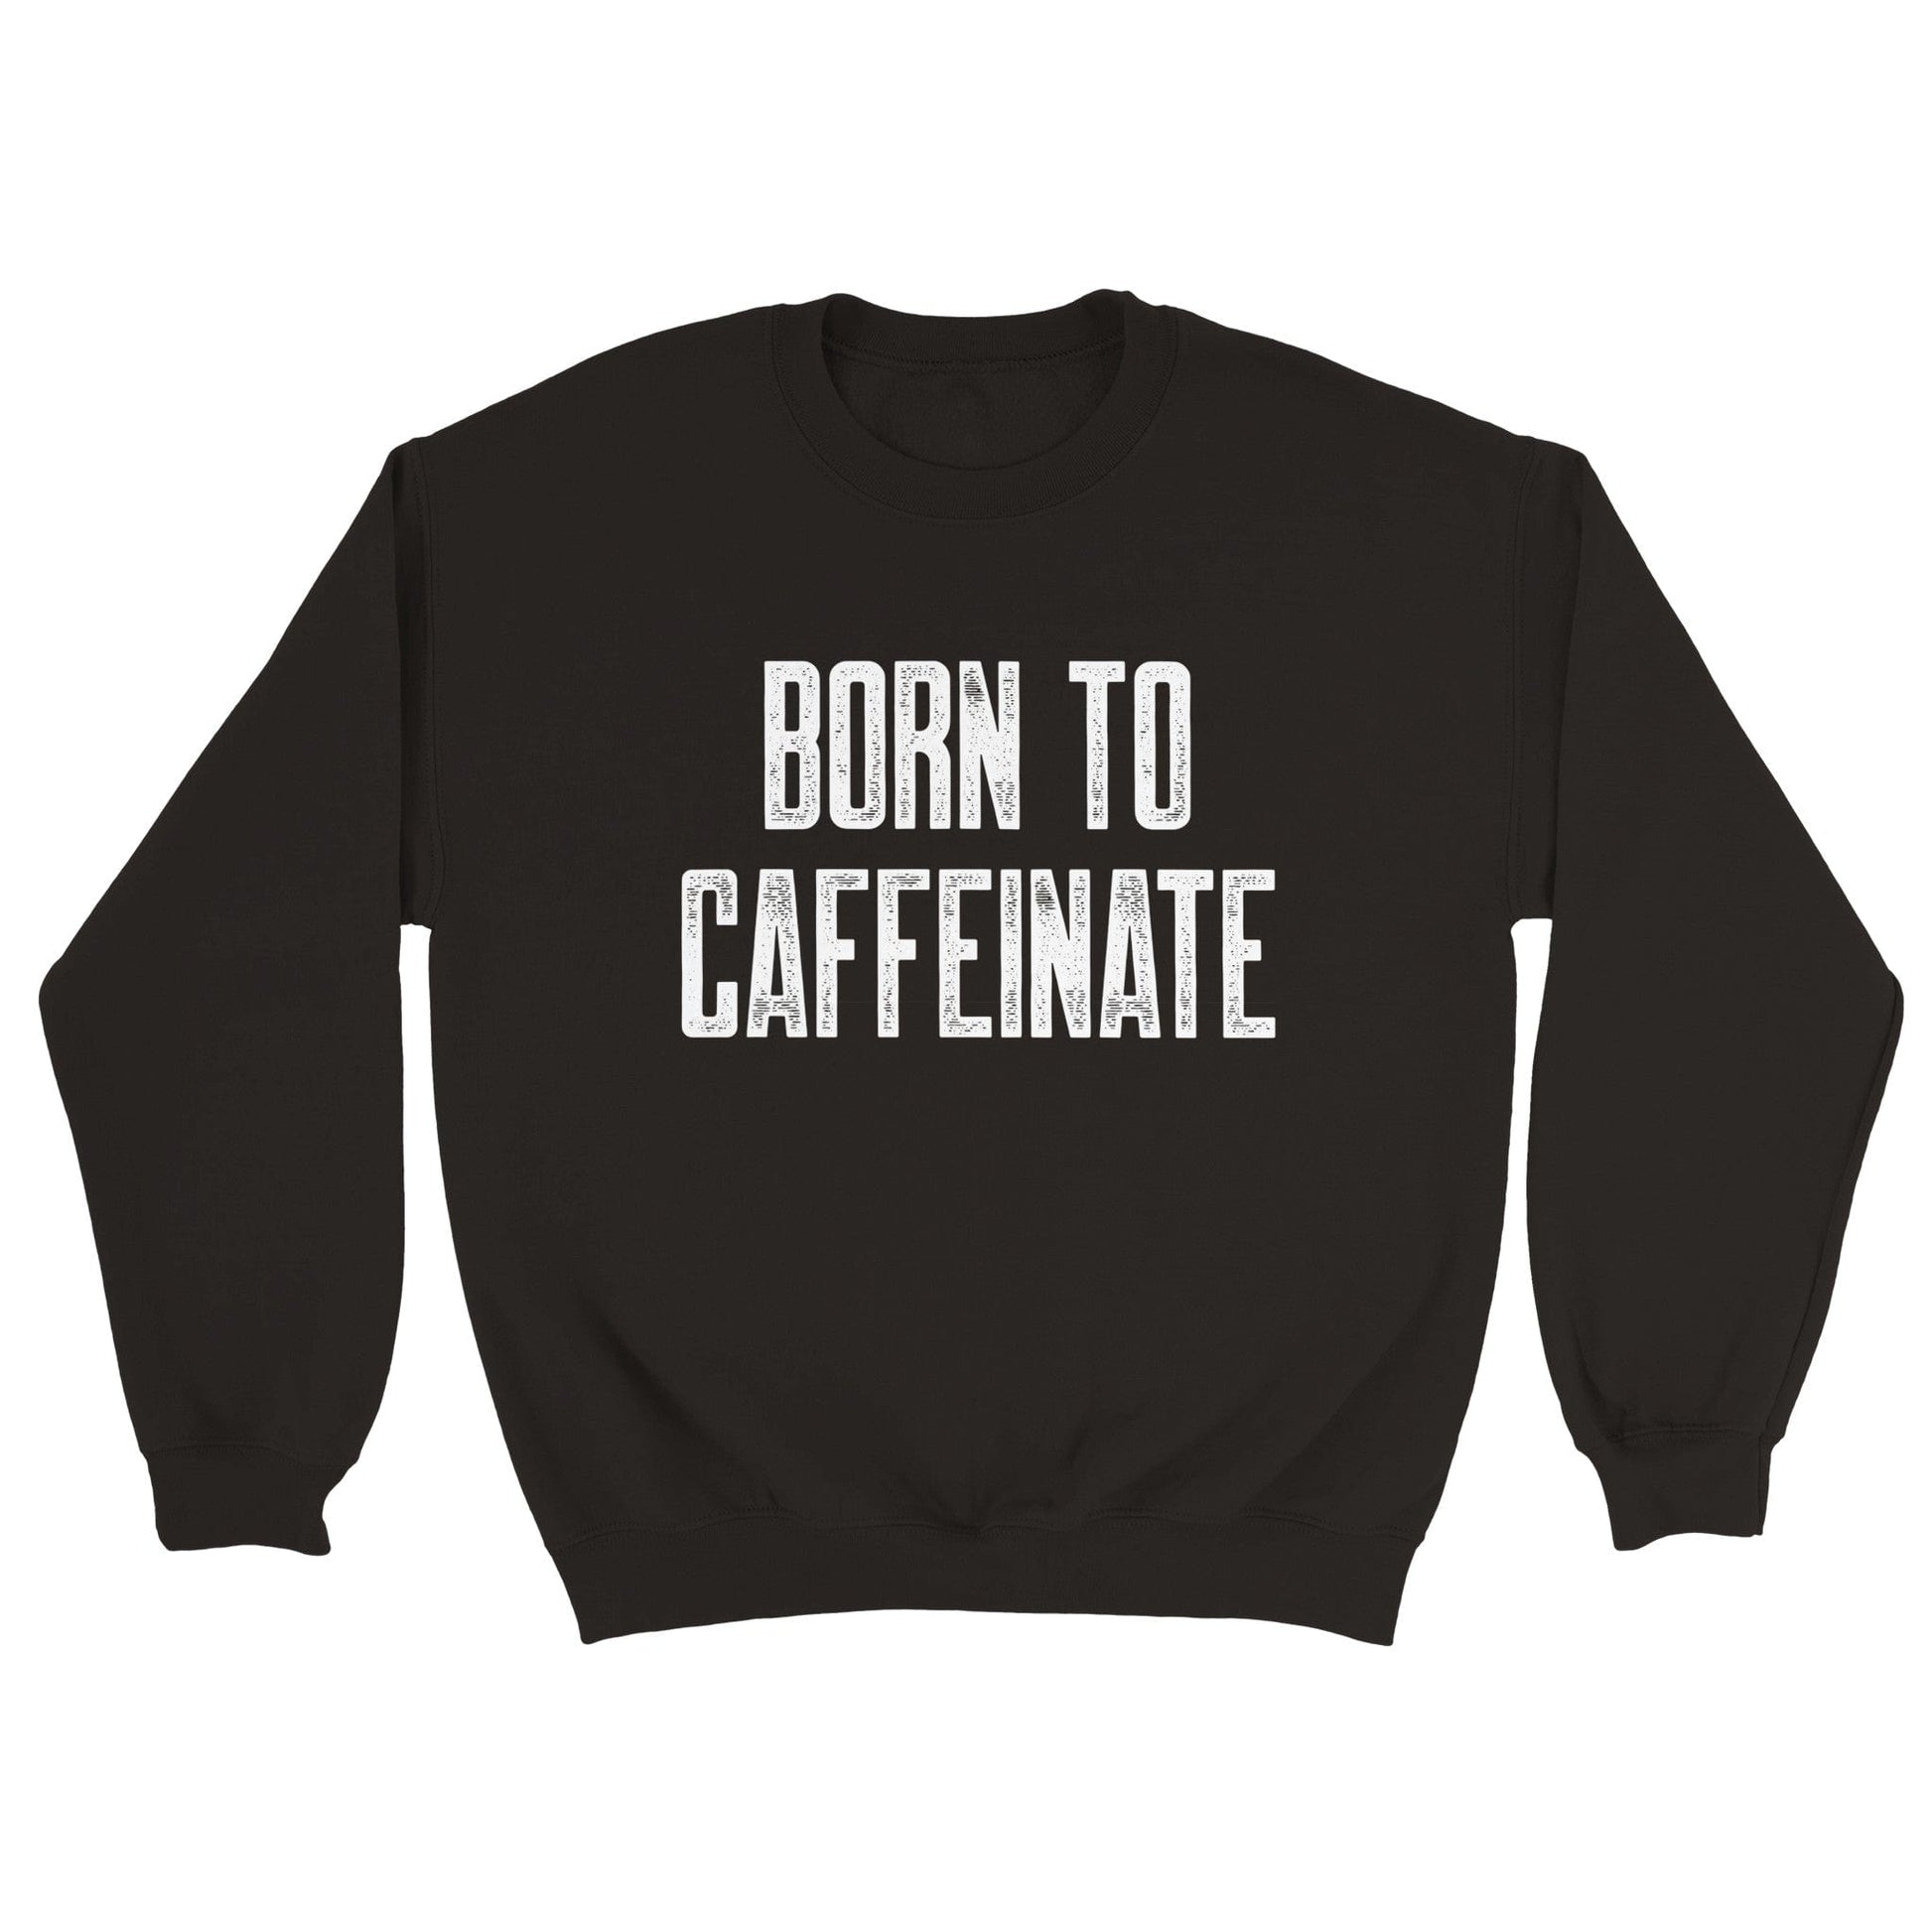 Good Bean Gifts "Born to Caffeinate" -Unisex Crewneck Sweatshirt Black / S